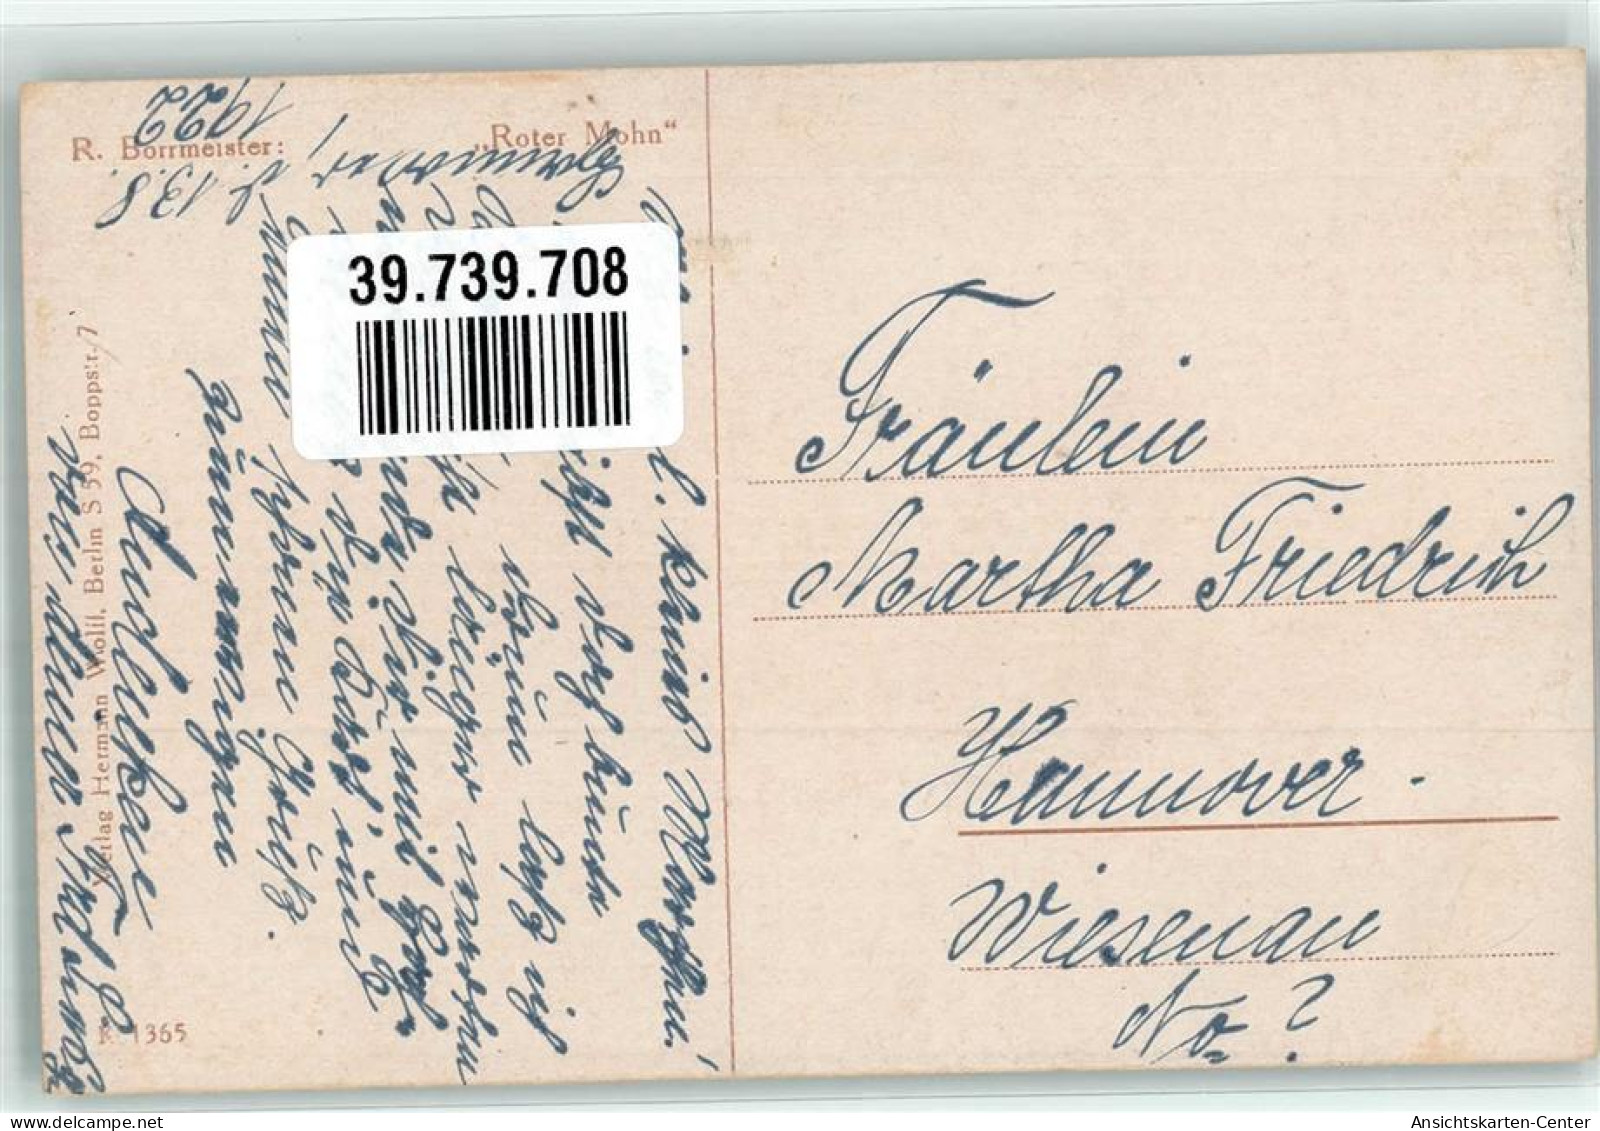 39739708 - Frau Mohnblume Verlag Wolff Nr.1365 - Borrmeister, R.